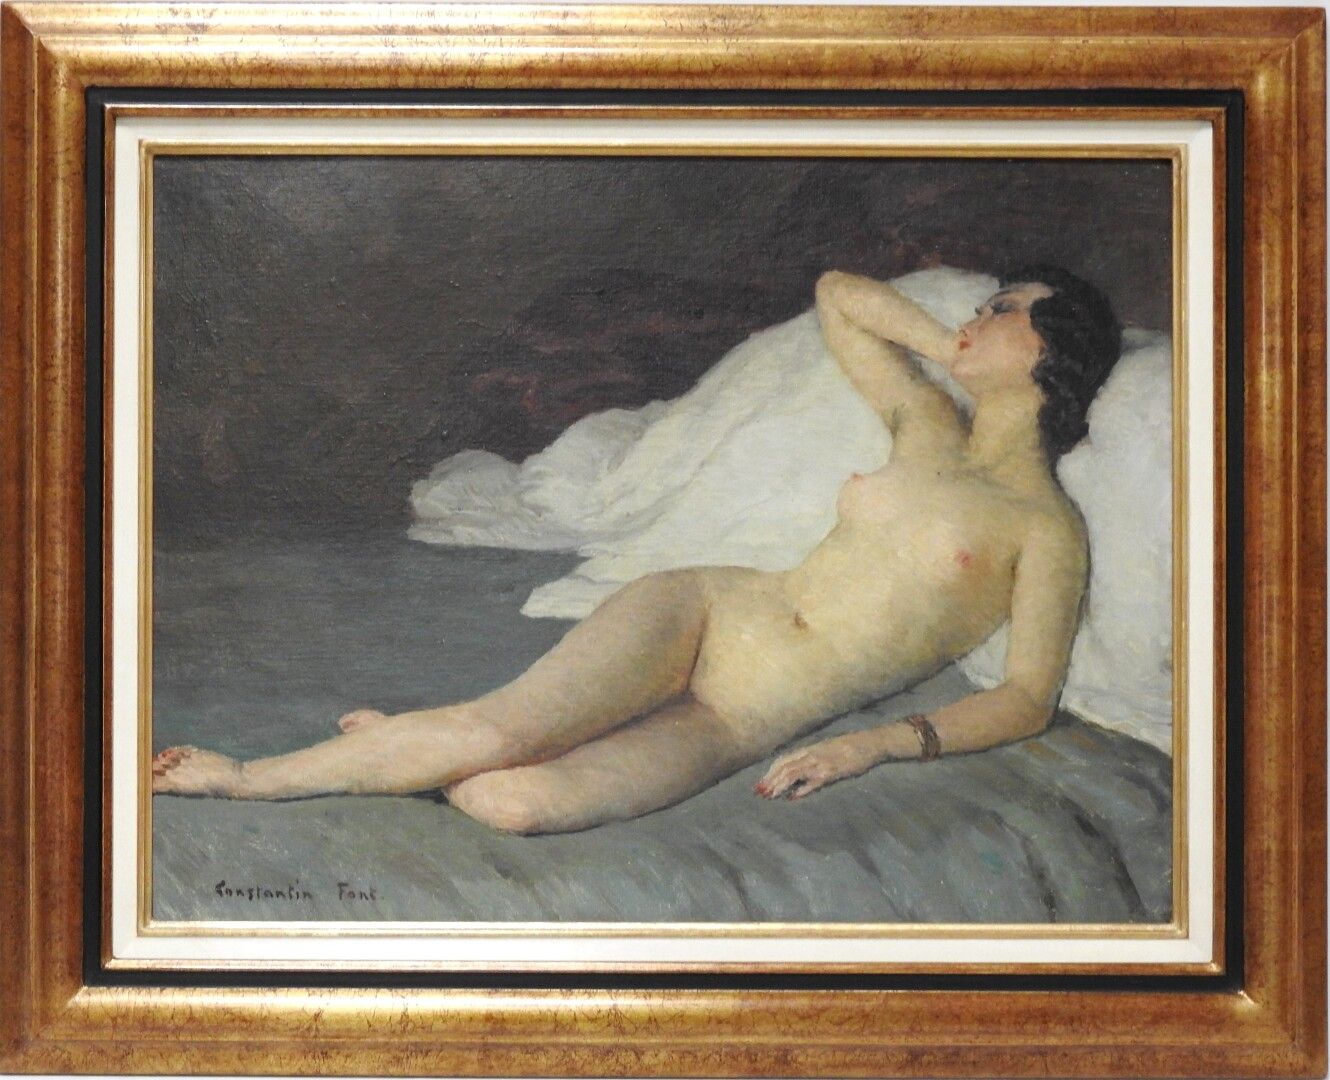 Null 康斯坦丁-方特 (1890 - 1954)

裸体与绿色床单

布面油画，左下角有签名

46.5 x 61 厘米